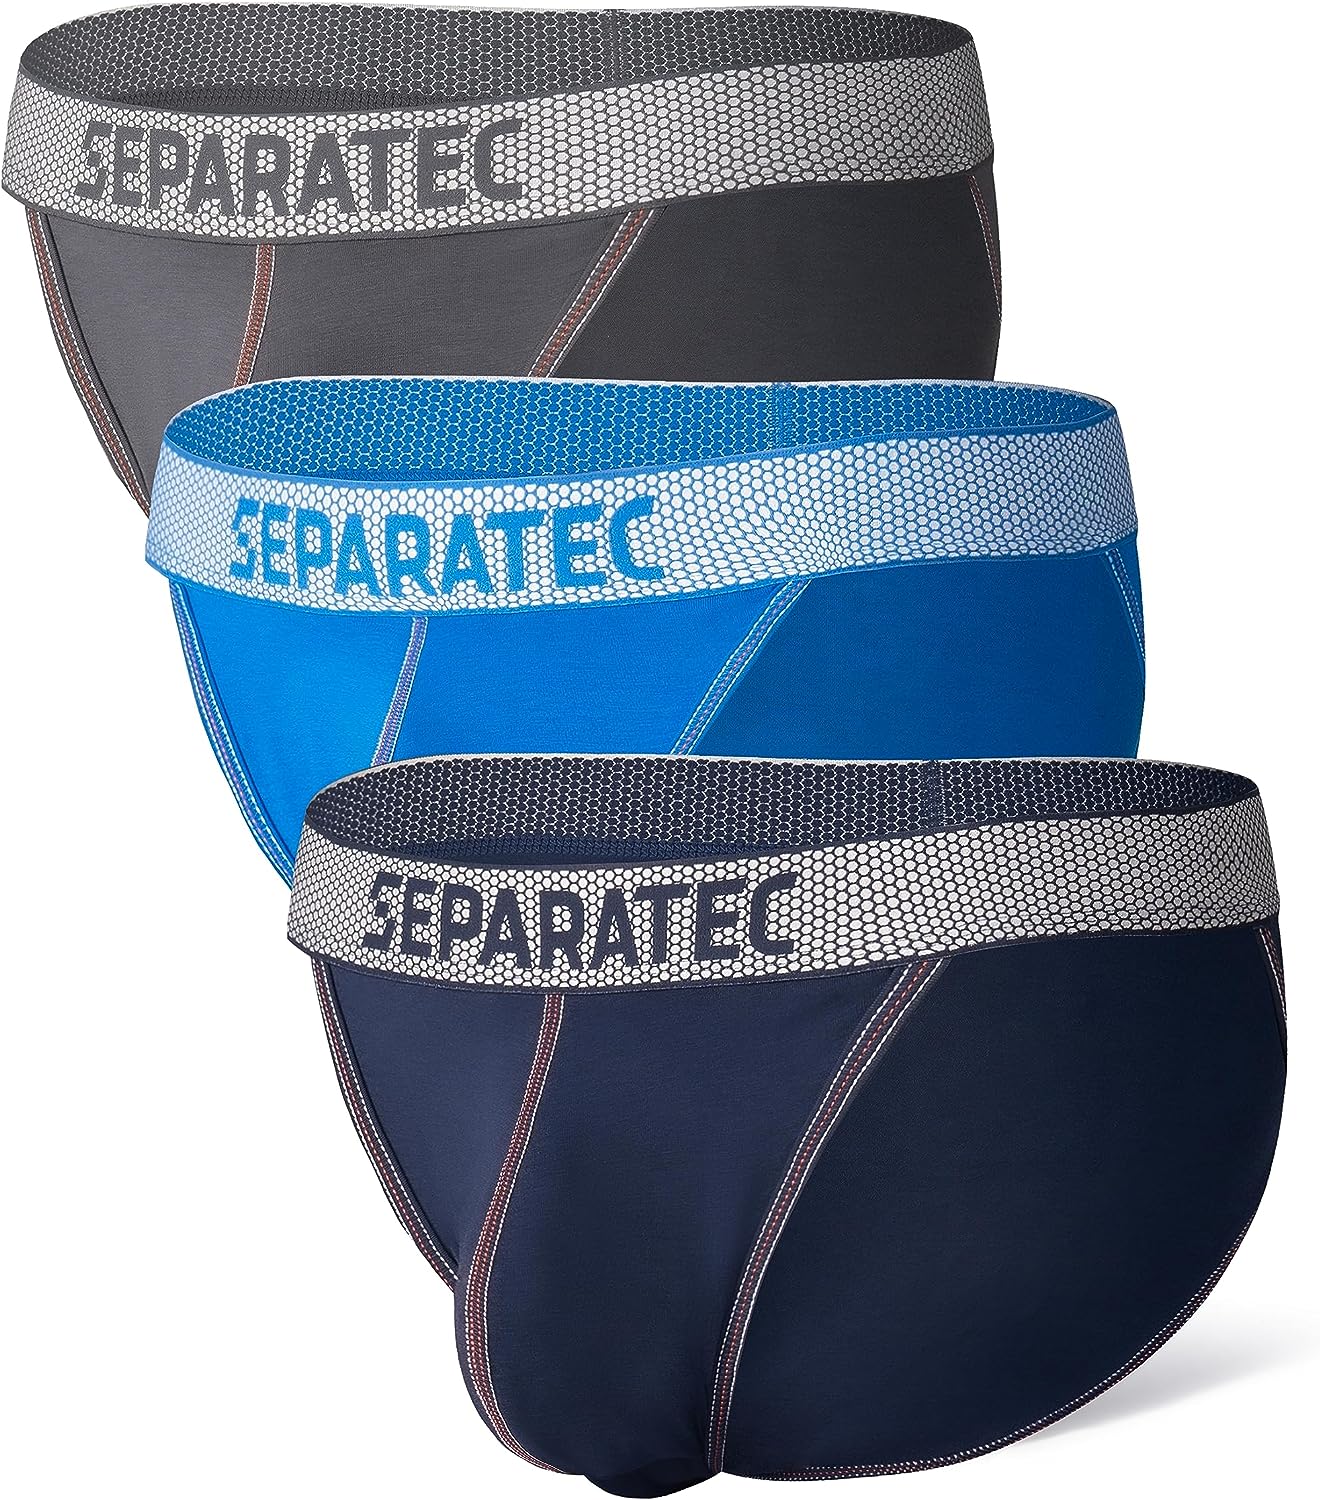 Separatec Men's Underwear 3 Pack Basic Micro Modal Soft Breathable Dual  Pouch Briefs